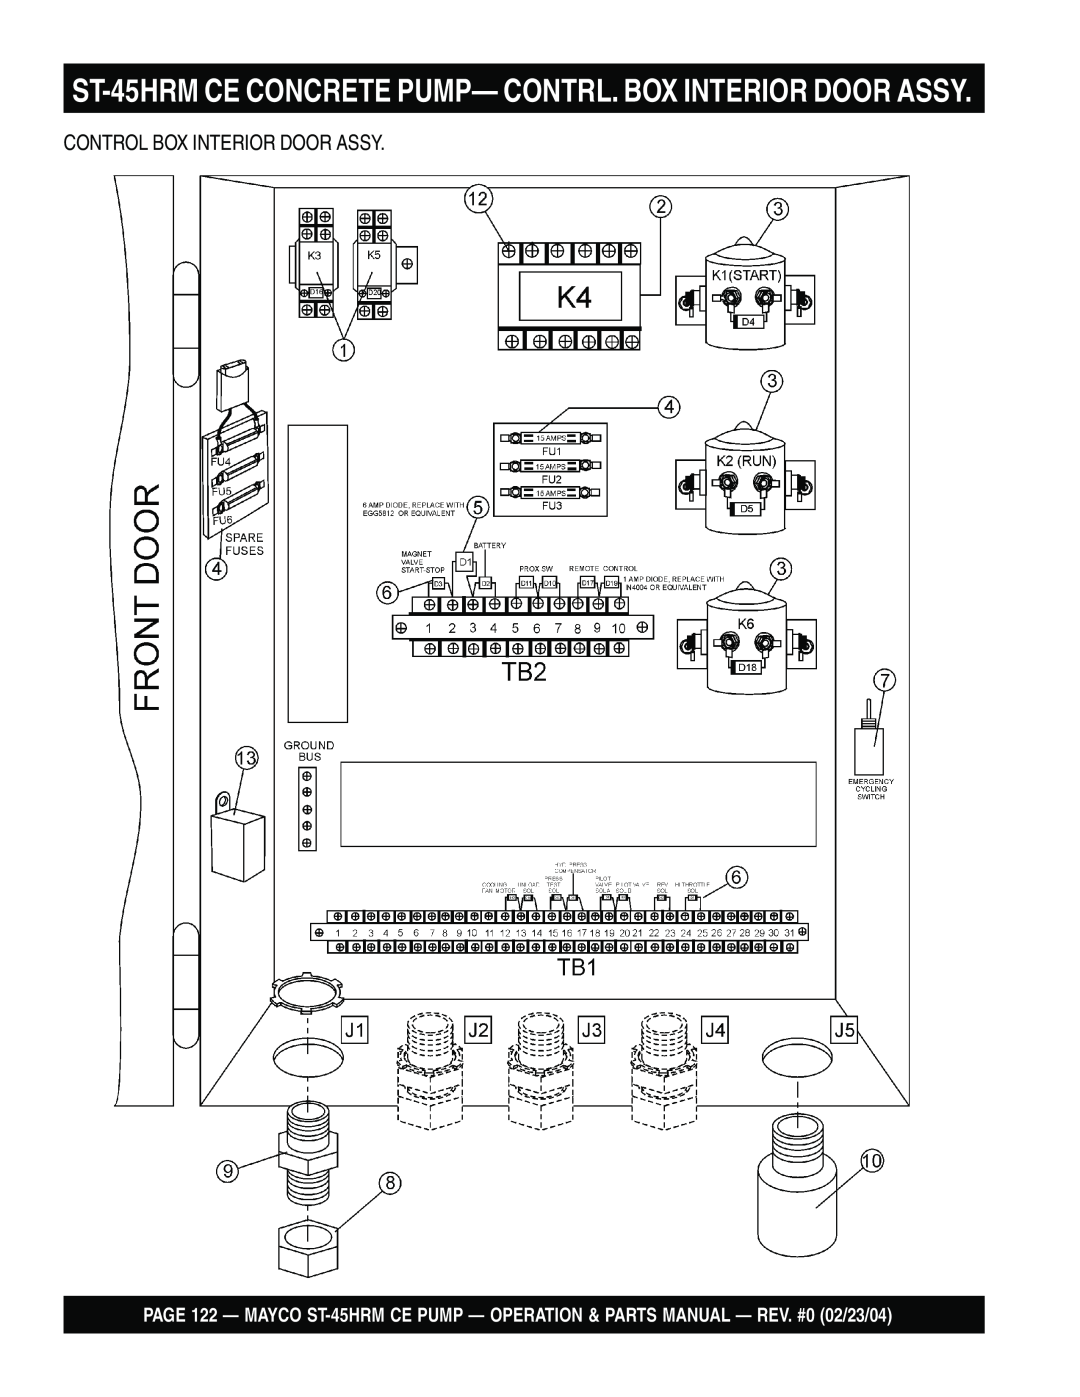 Multiquip ST-45HRM CE manual Control Box Interior Door Assy 